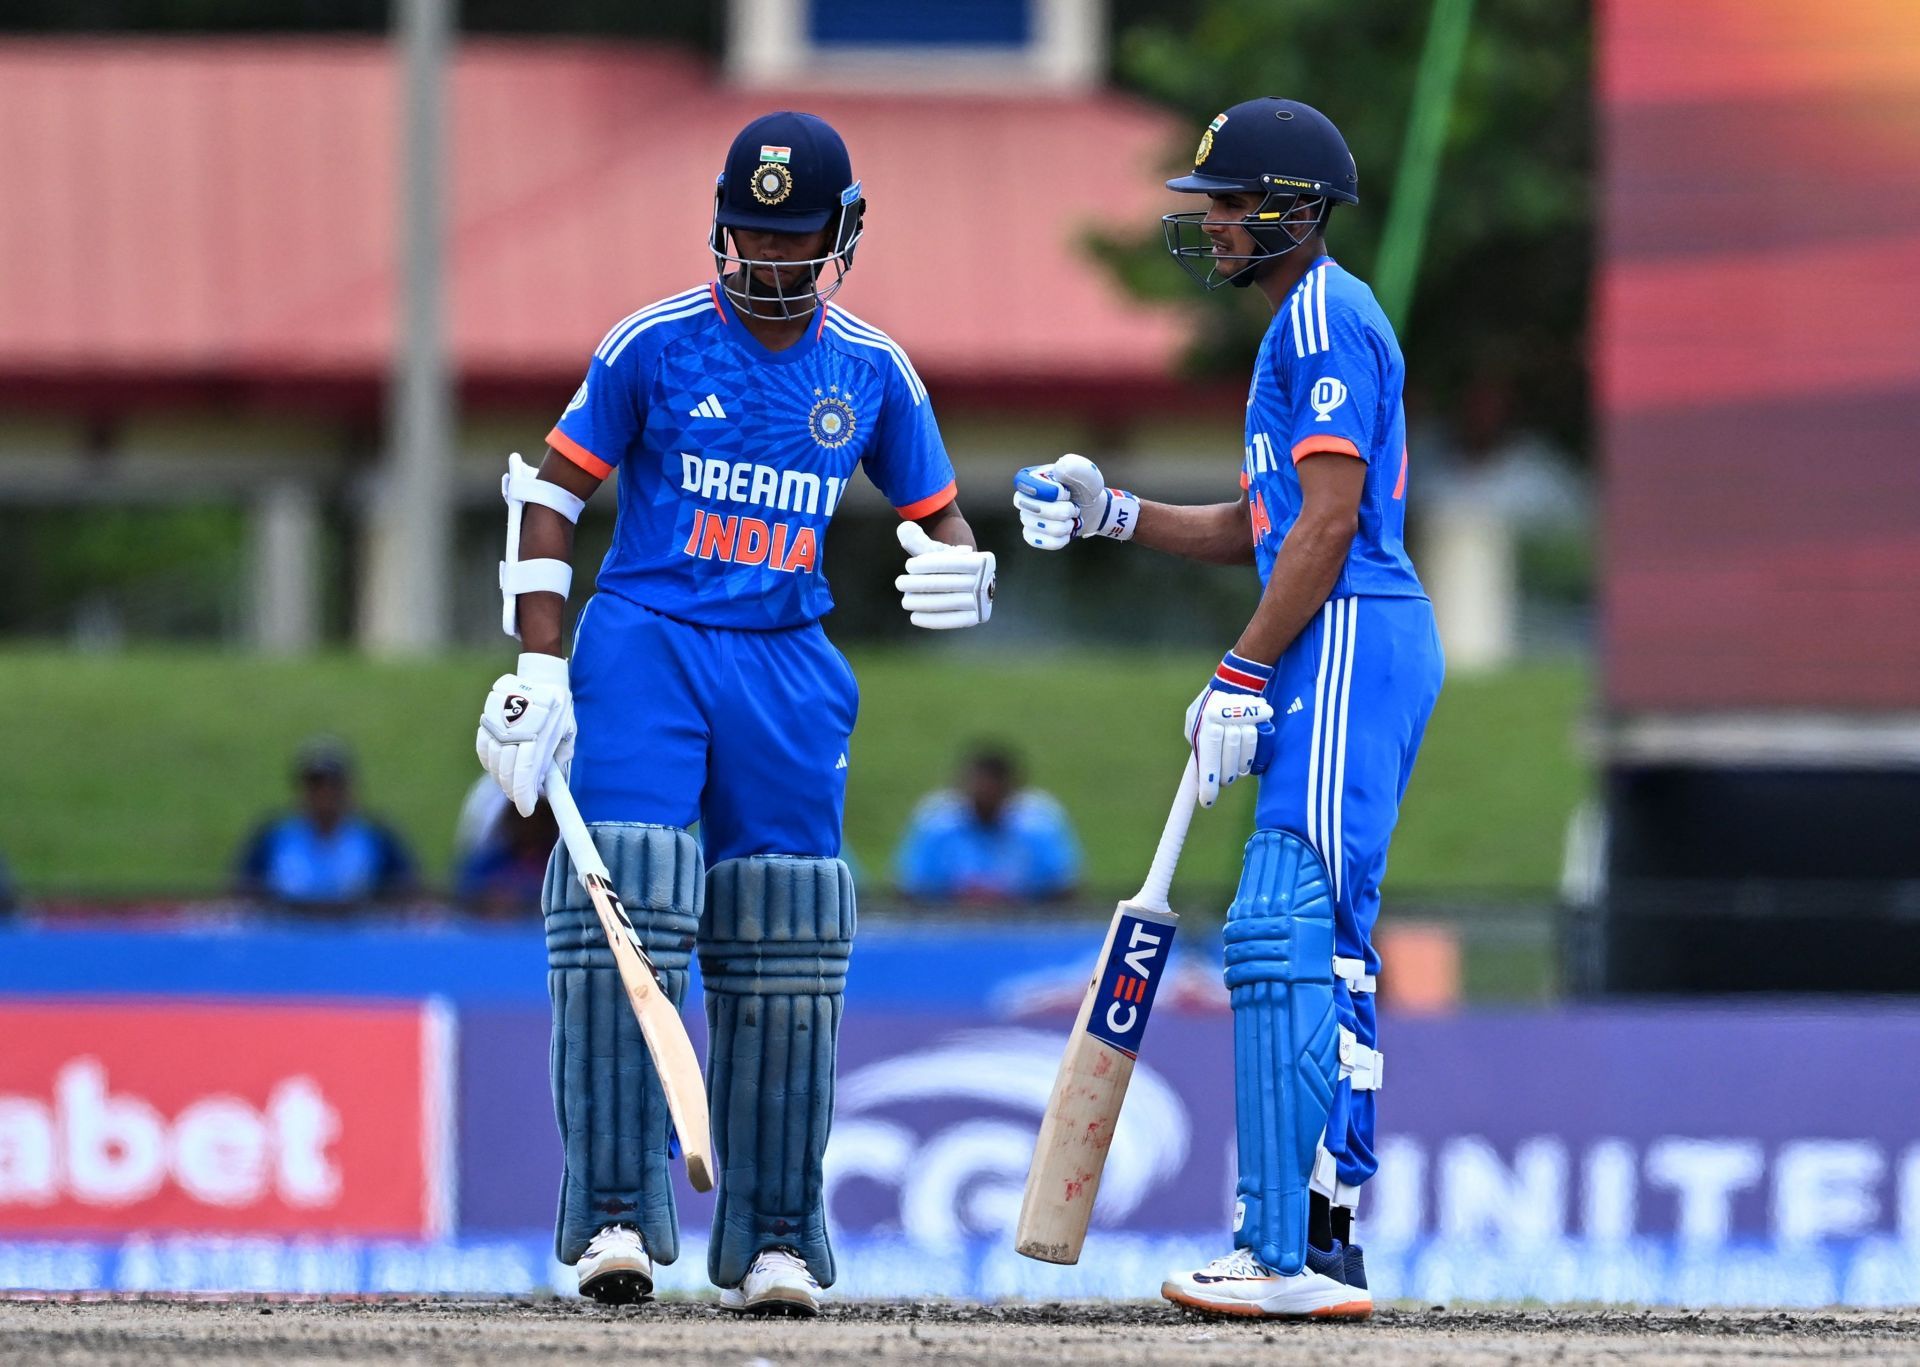 Yashasvi Jaiswal and Shubman Gill notched up a 165-run opening partnership